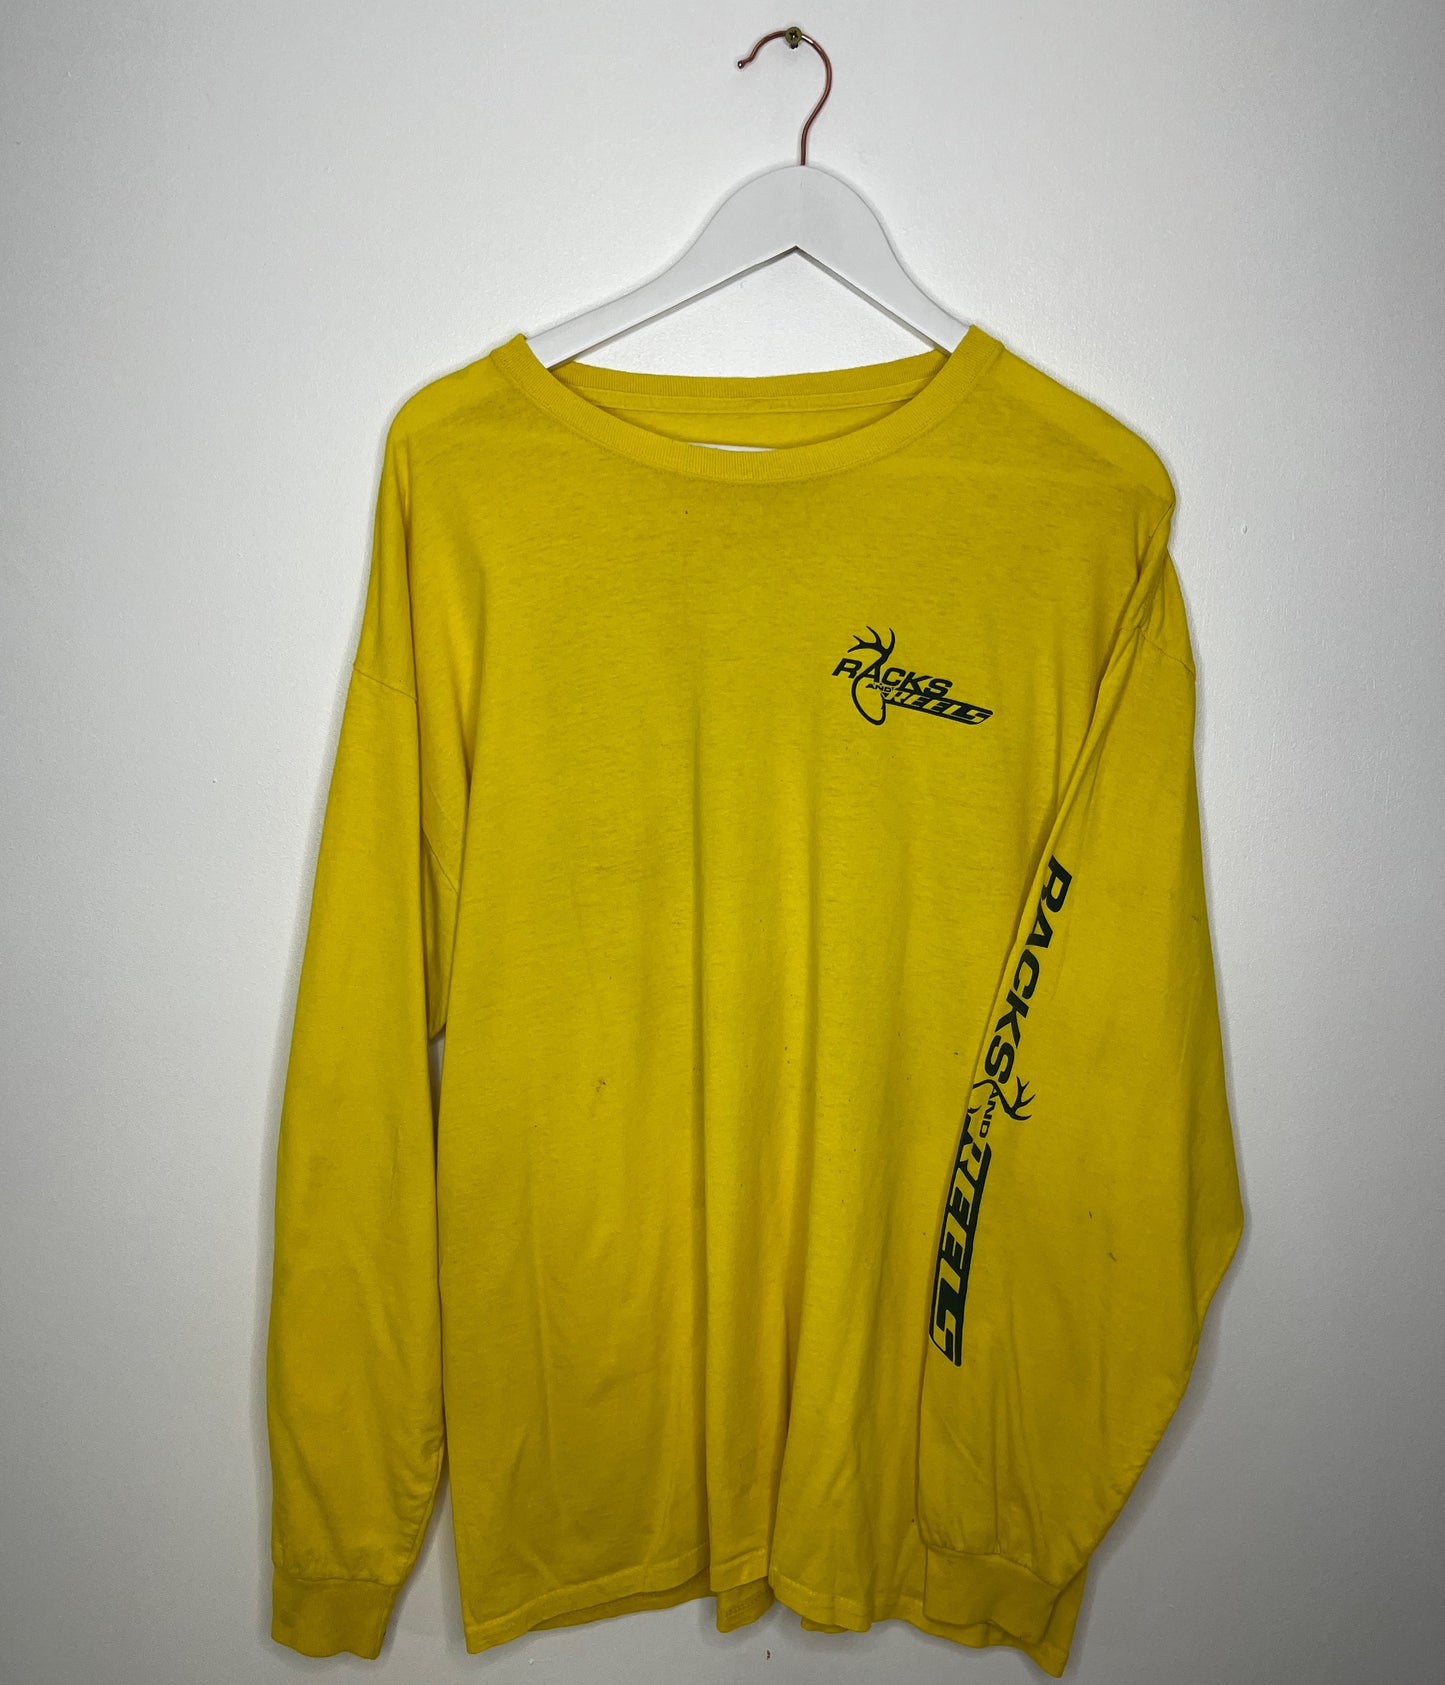 Long Sleeve Yellow Top